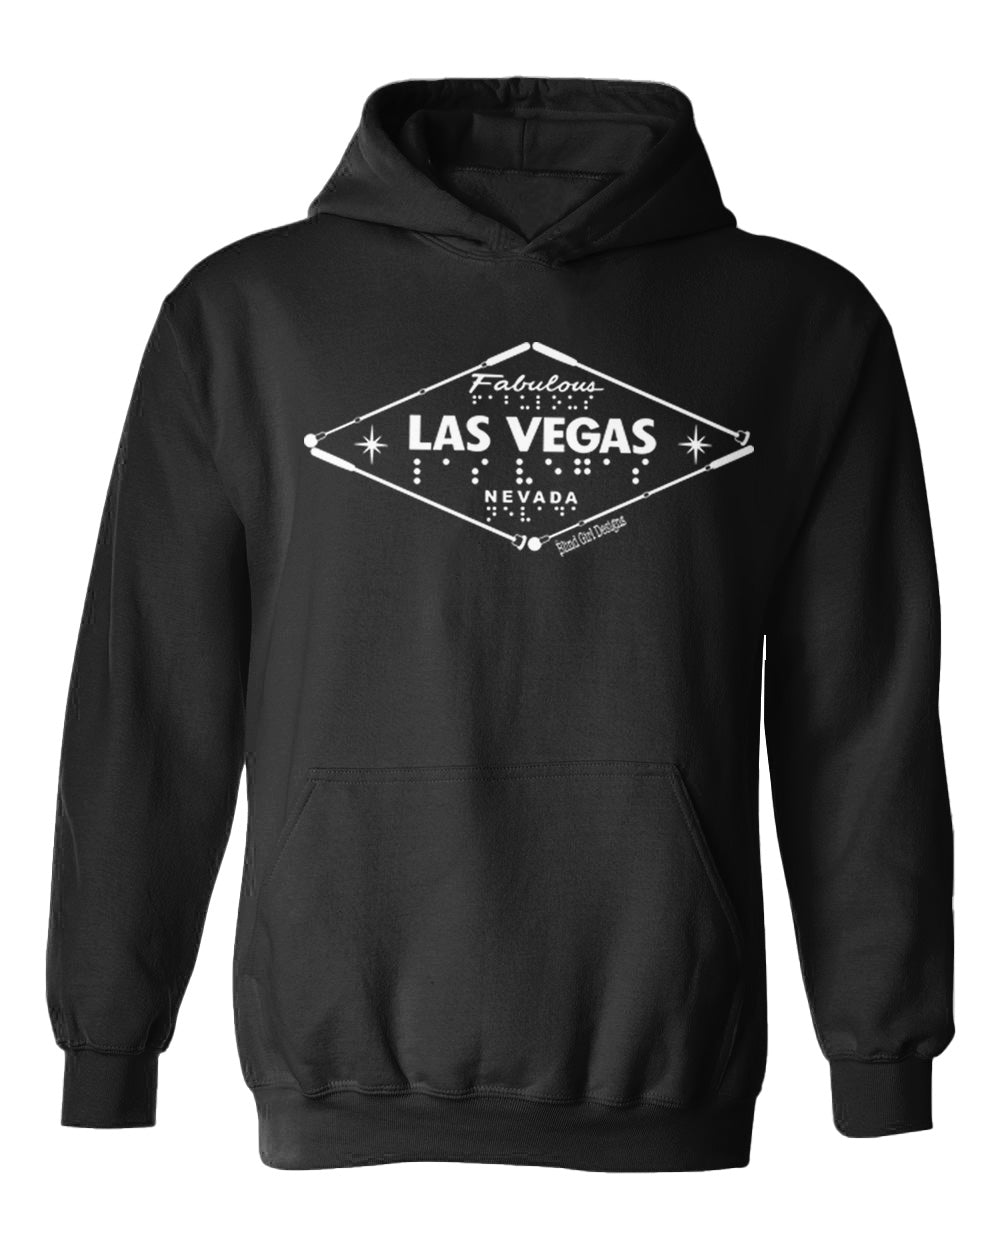 Fabulous Las Vegas White Cane Hoodie Sweatshirt Black